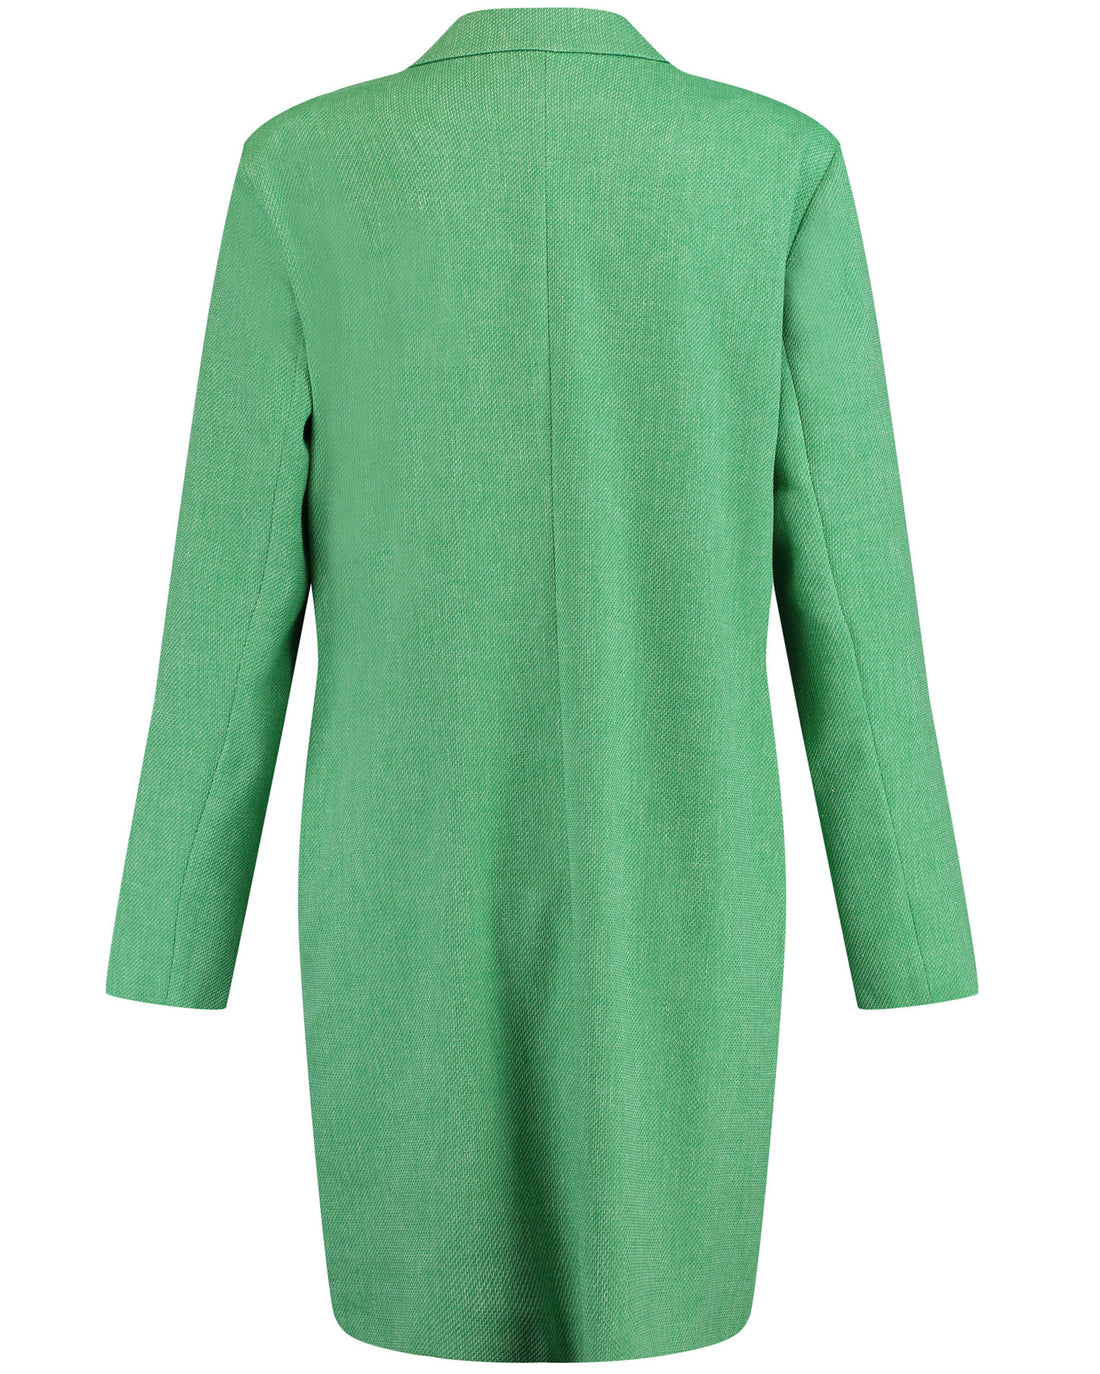 Green Jacket Long-Sleeve